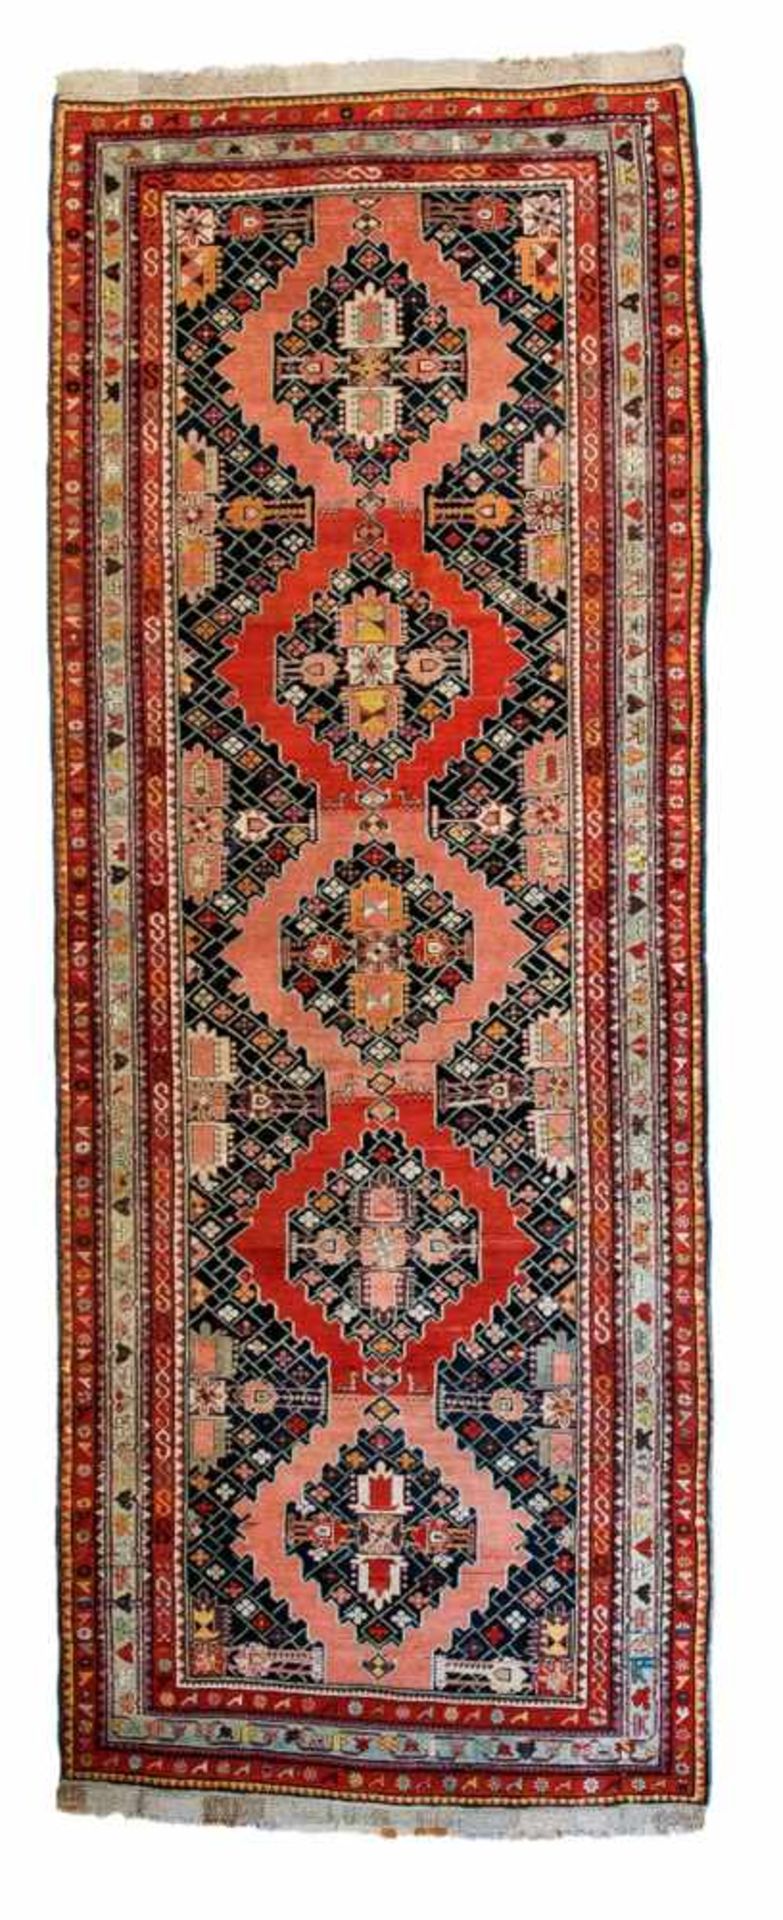 A Karabakh carpetWool. Repairs, some over creases. 344 x 131 cm. Armenia / Azerbaijan, late 19th /